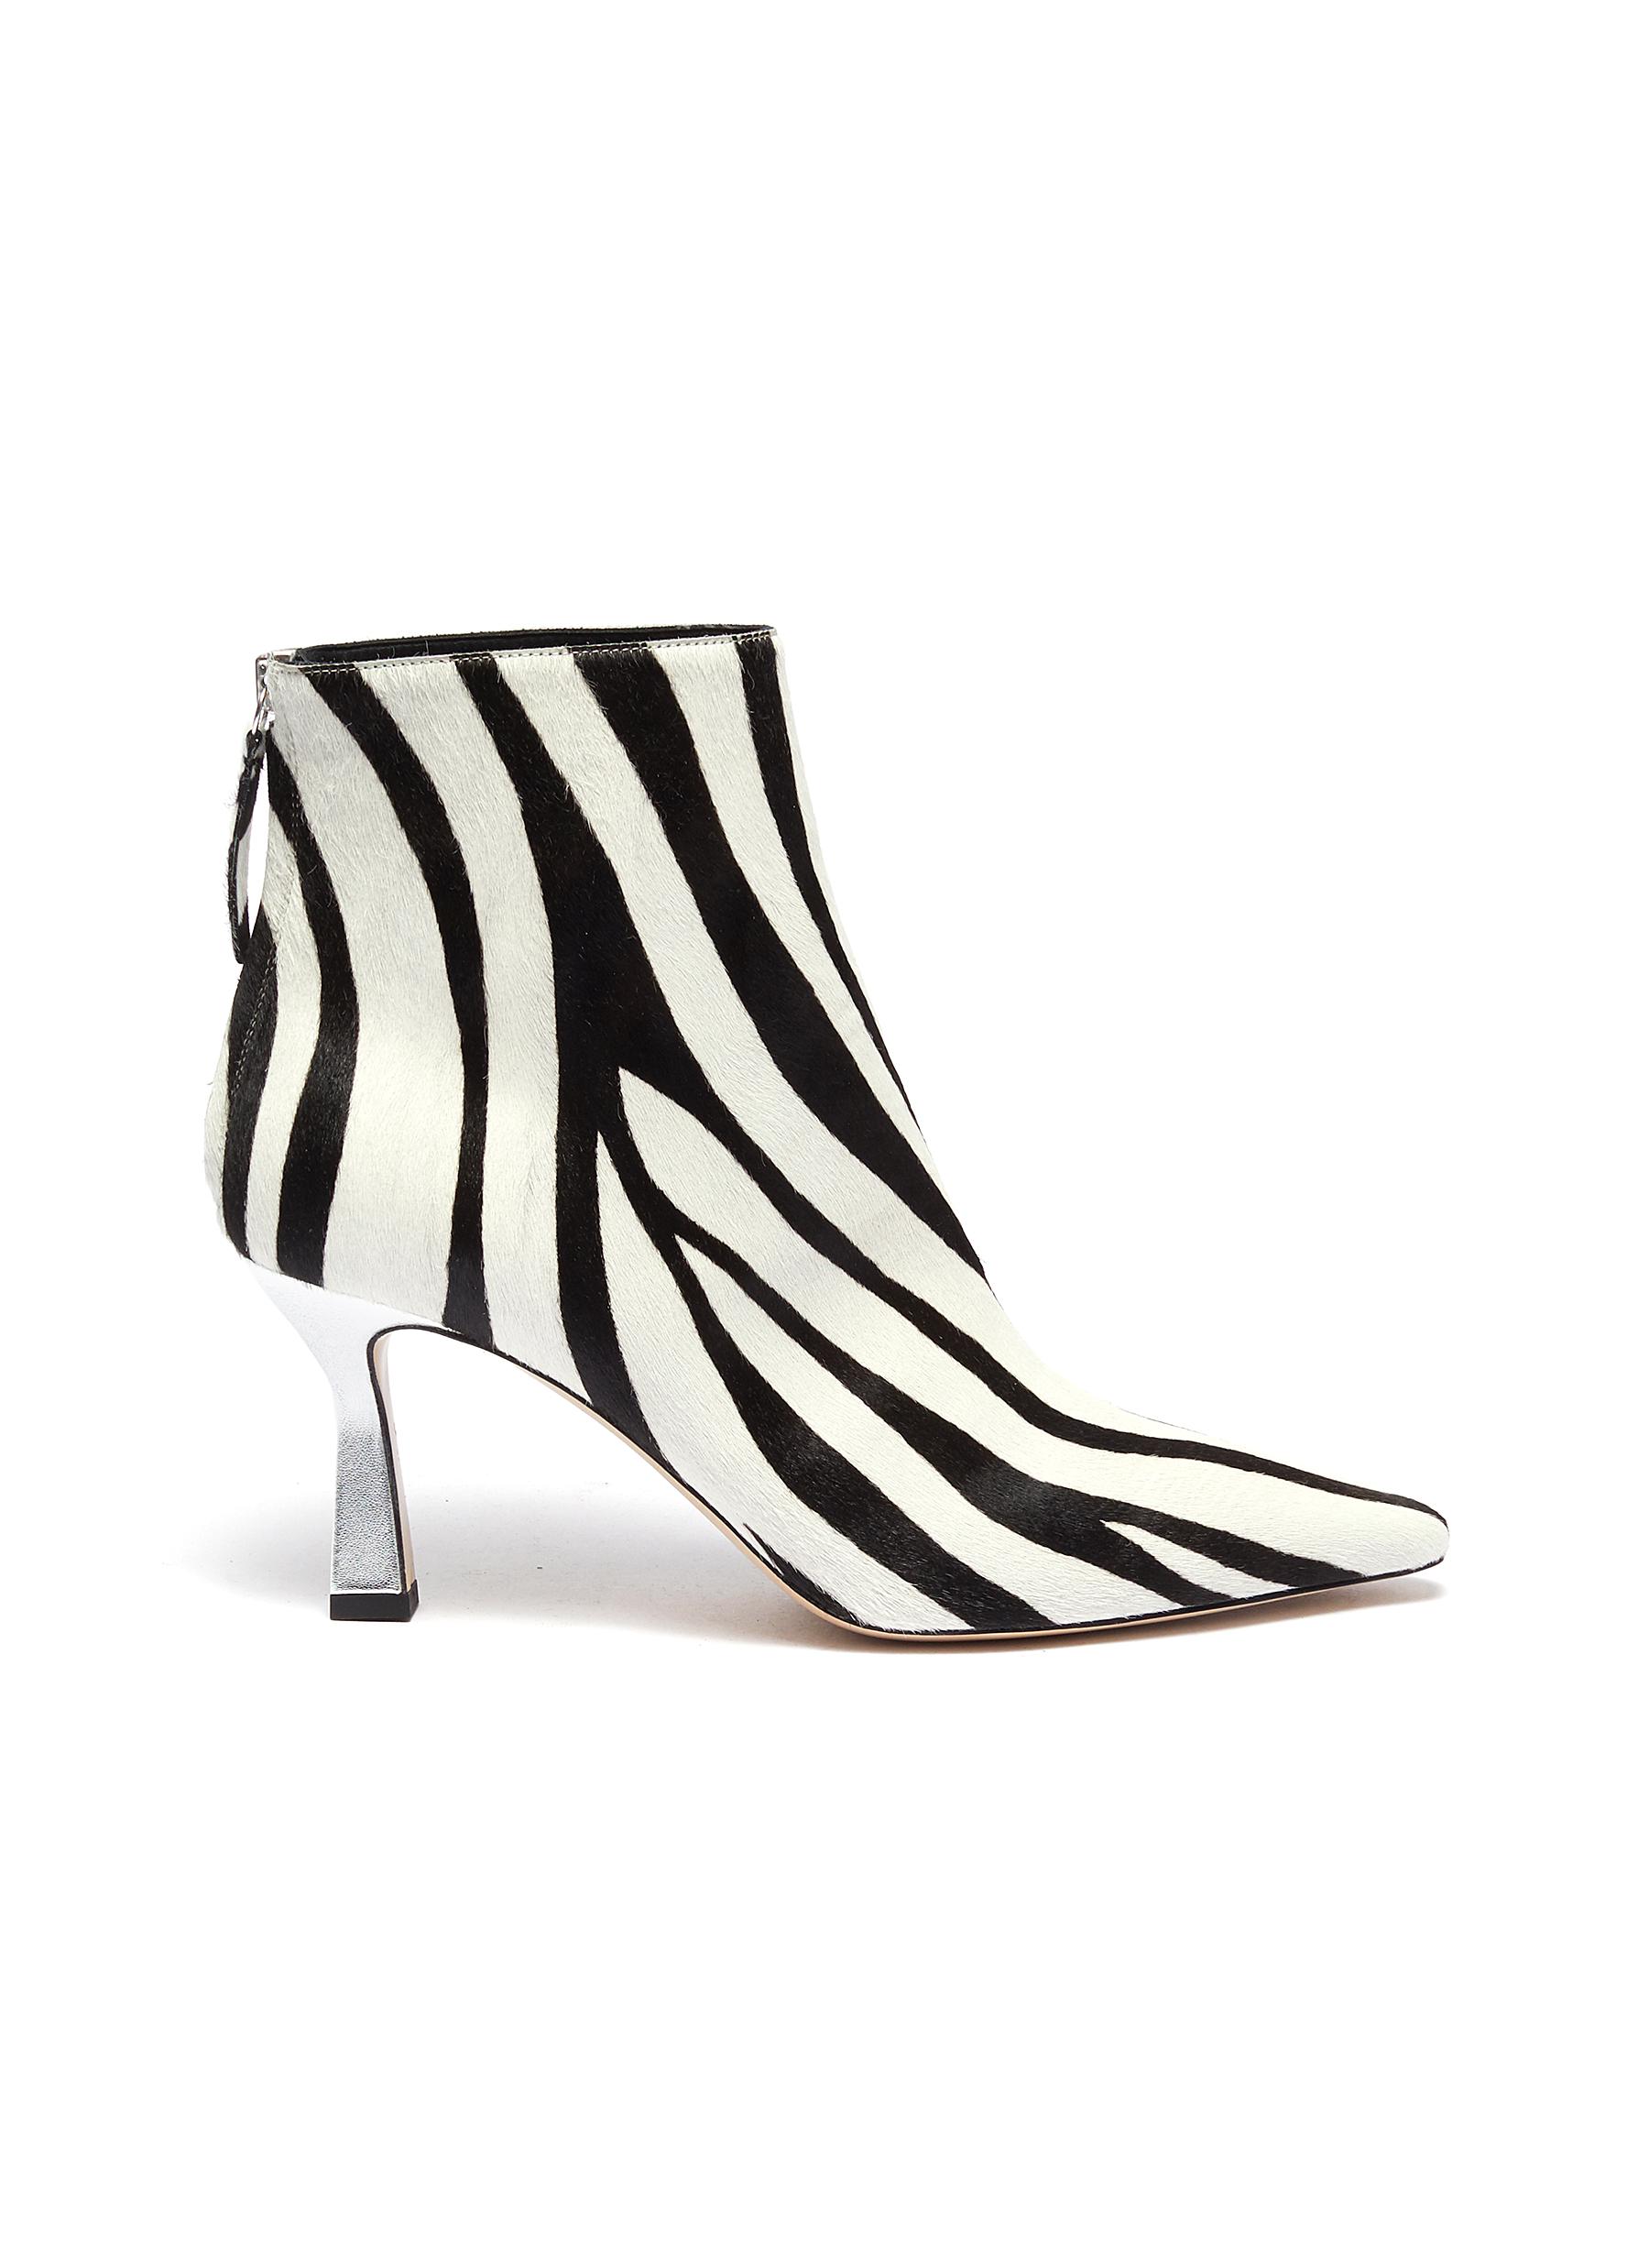 Lina metallic heel zebra print bovine hair ankle boots by Wandler